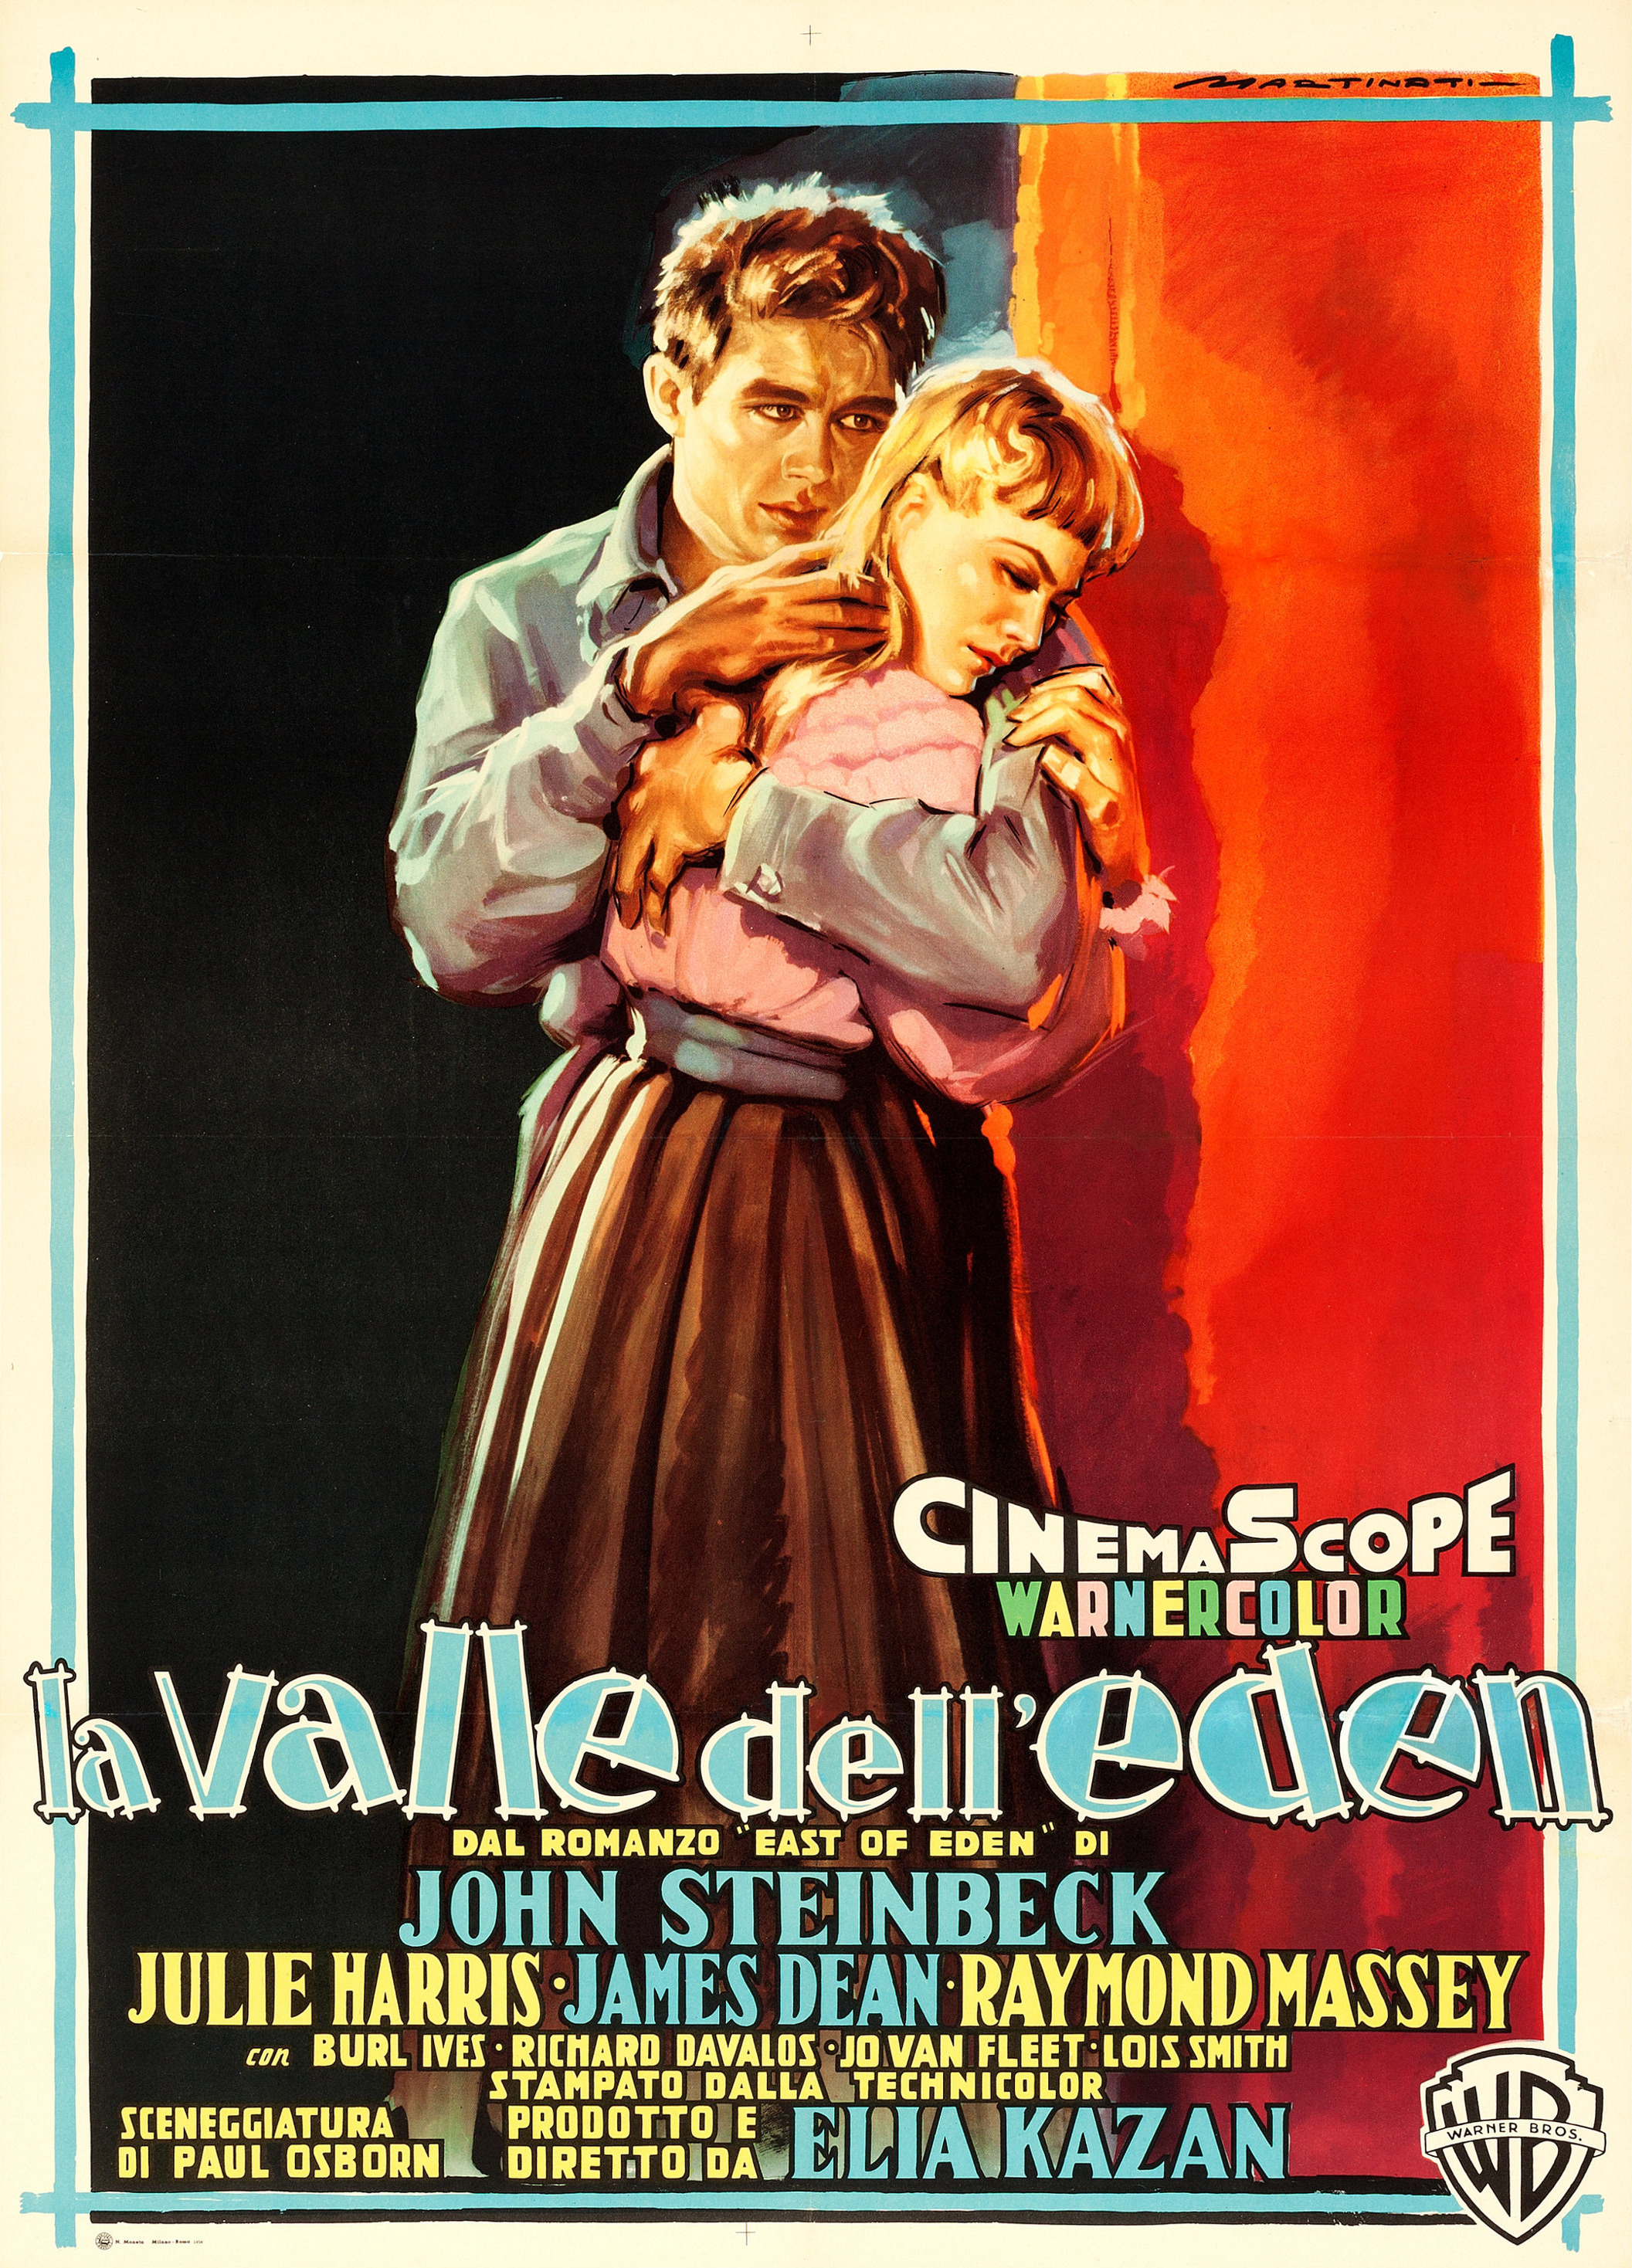 Mega Sized Movie Poster Image for East of Eden (#15 of 15)